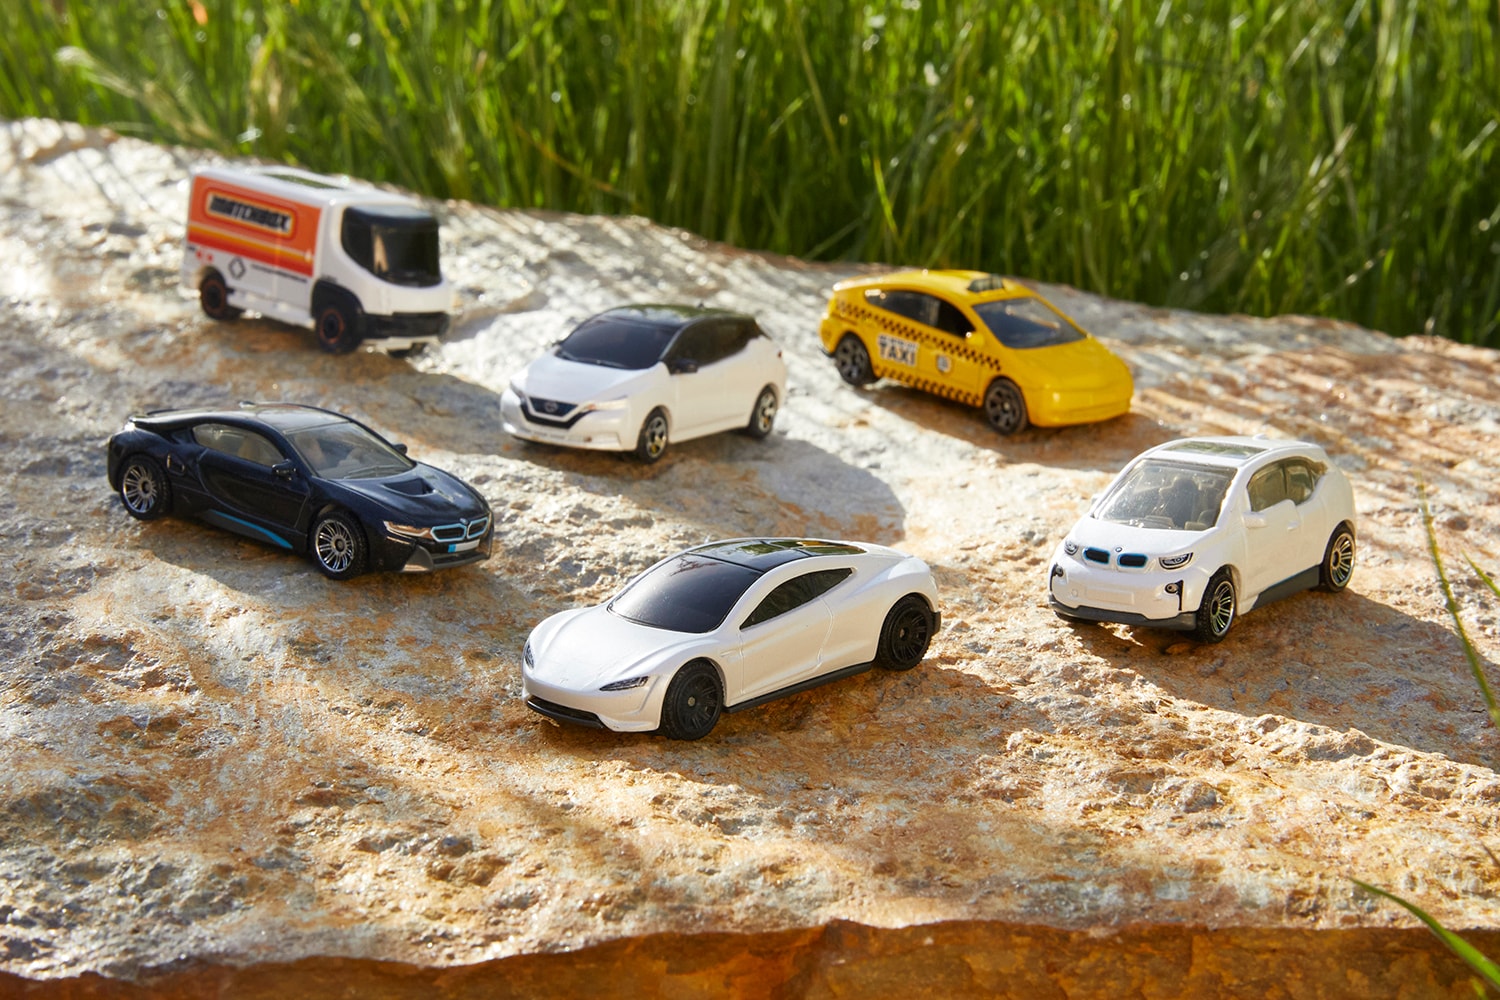 Mattel Matchbox CarbonNeutral Tesla Roadster die-cast toy car recycled plastic steel plastic zinc tesla eVs 